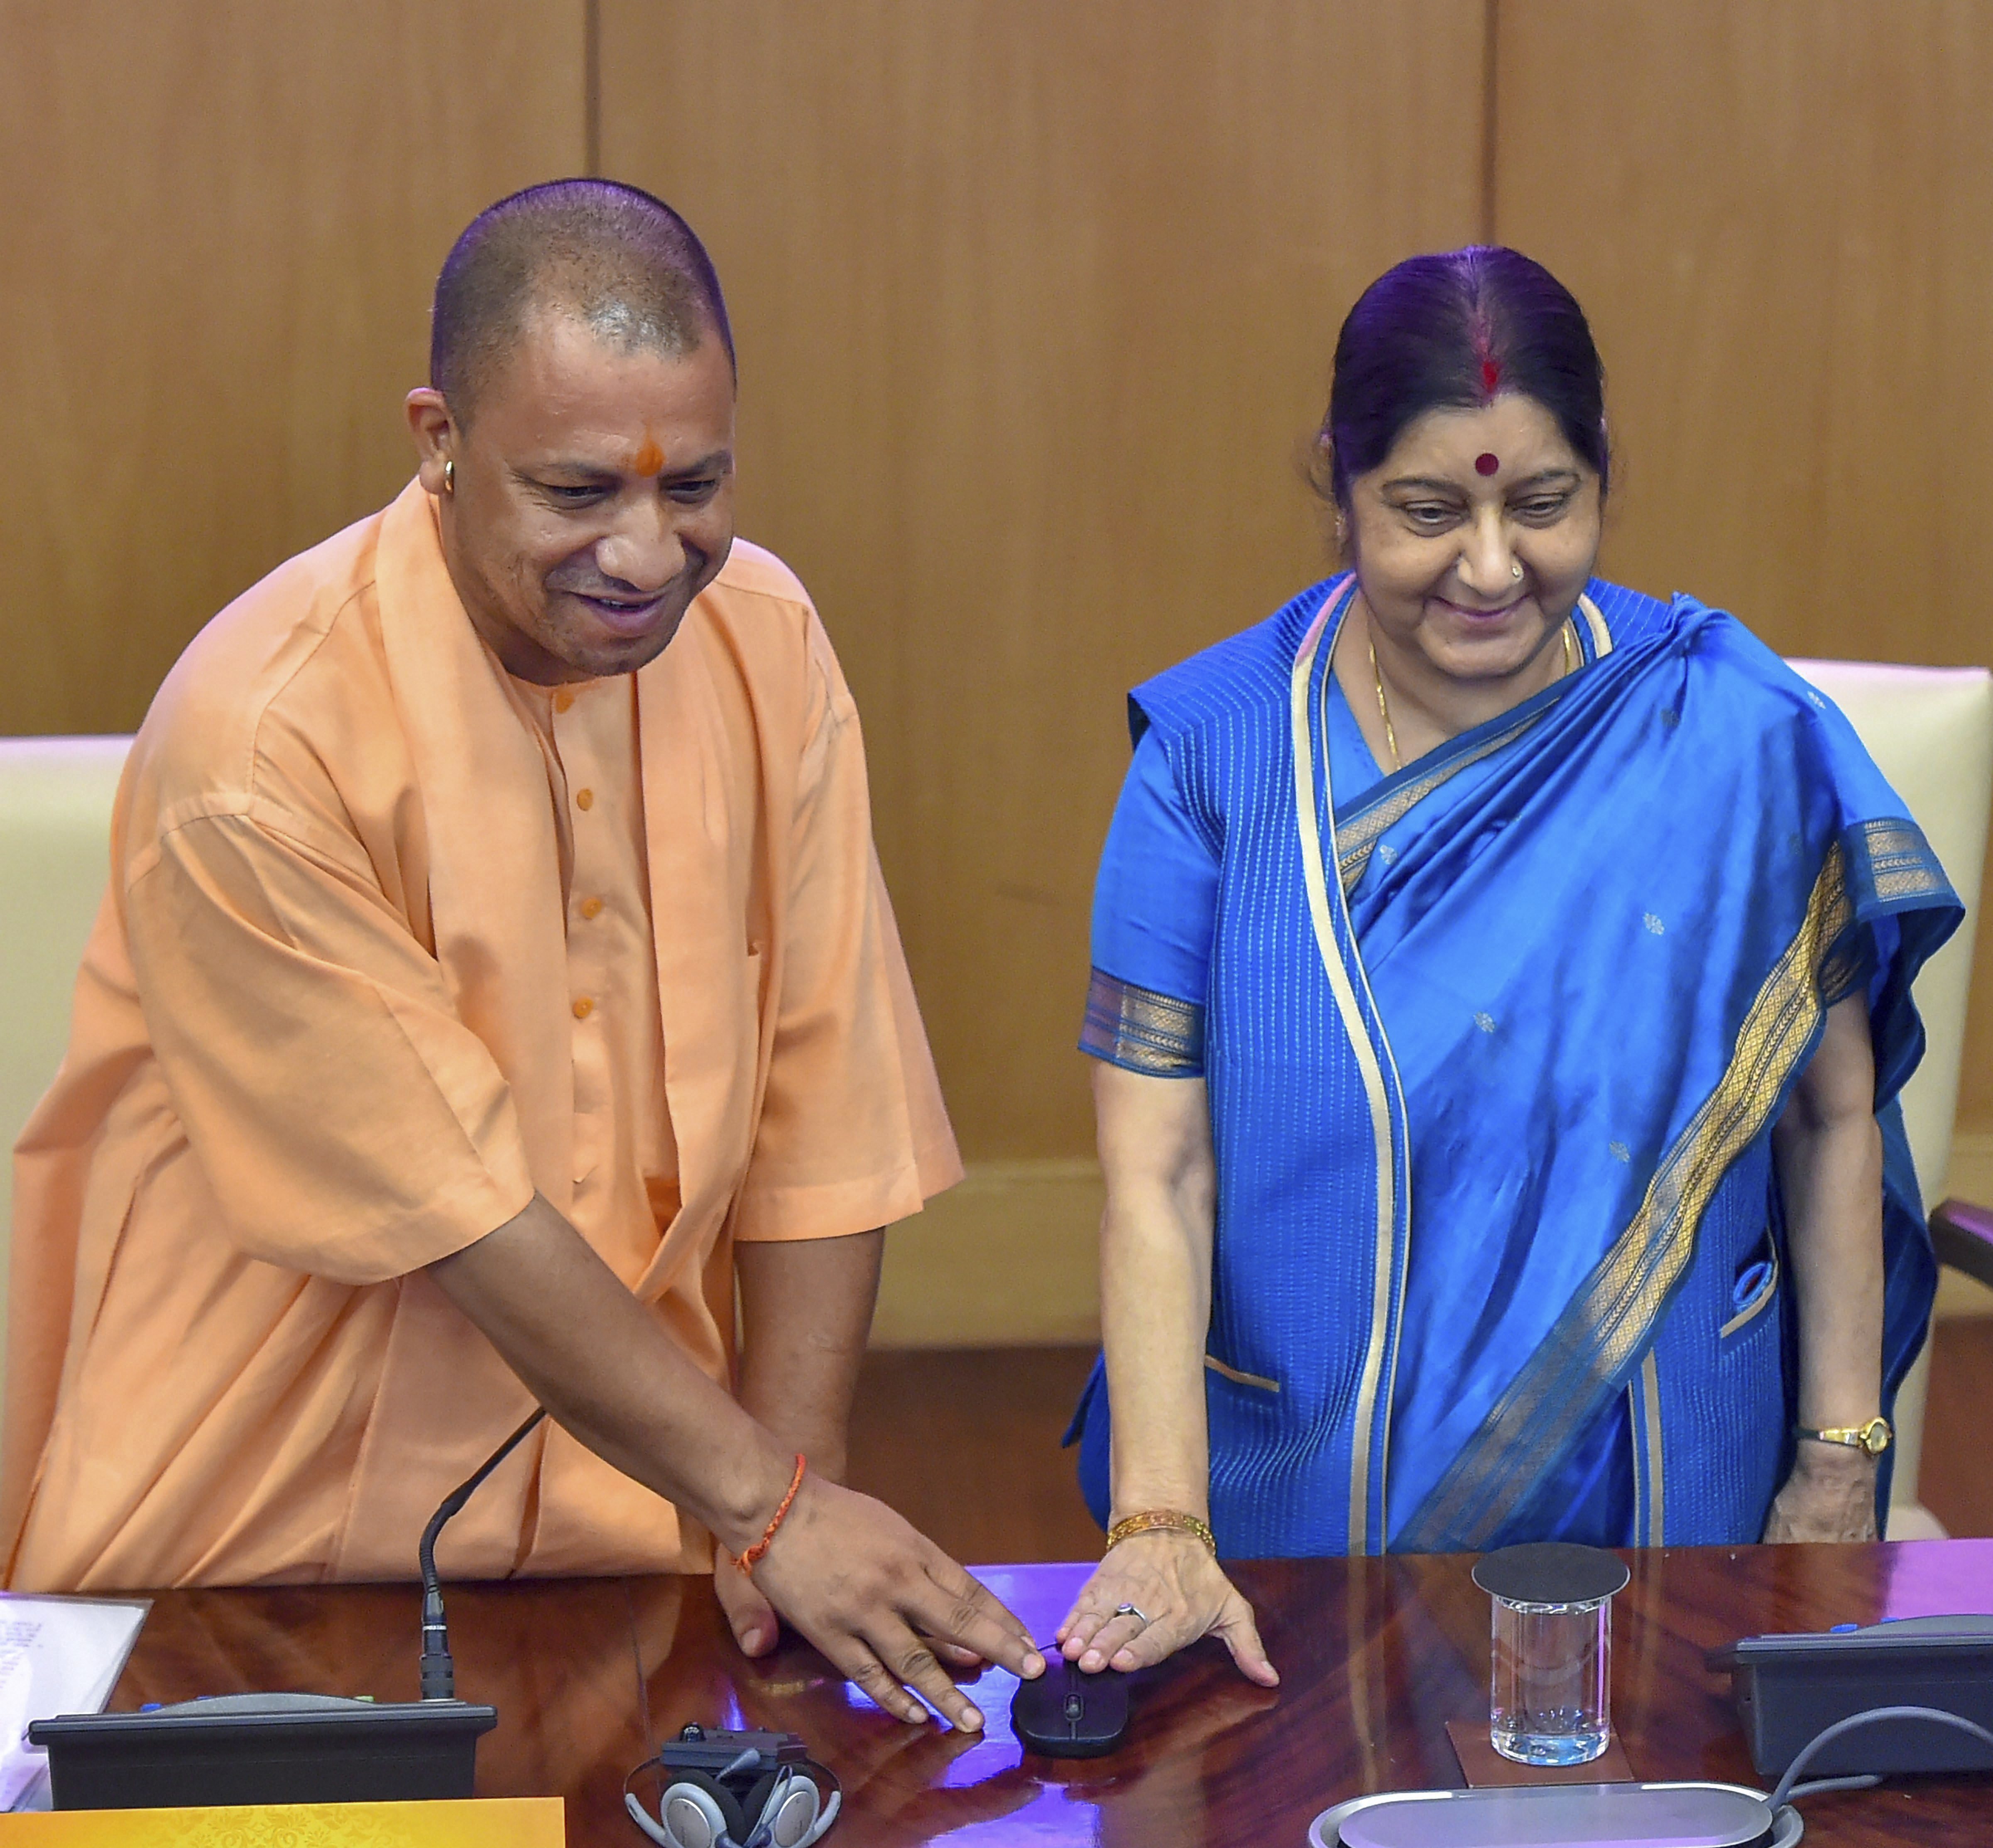 External Affairs Minister Sushma Swaraj with Uttar Pradesh Chief Minister Yogi Adityanath launch the website for 15th Pravasi Bhartiya Divas, which will be held in Varanasi on January 21-23, in New Delhi - PTI